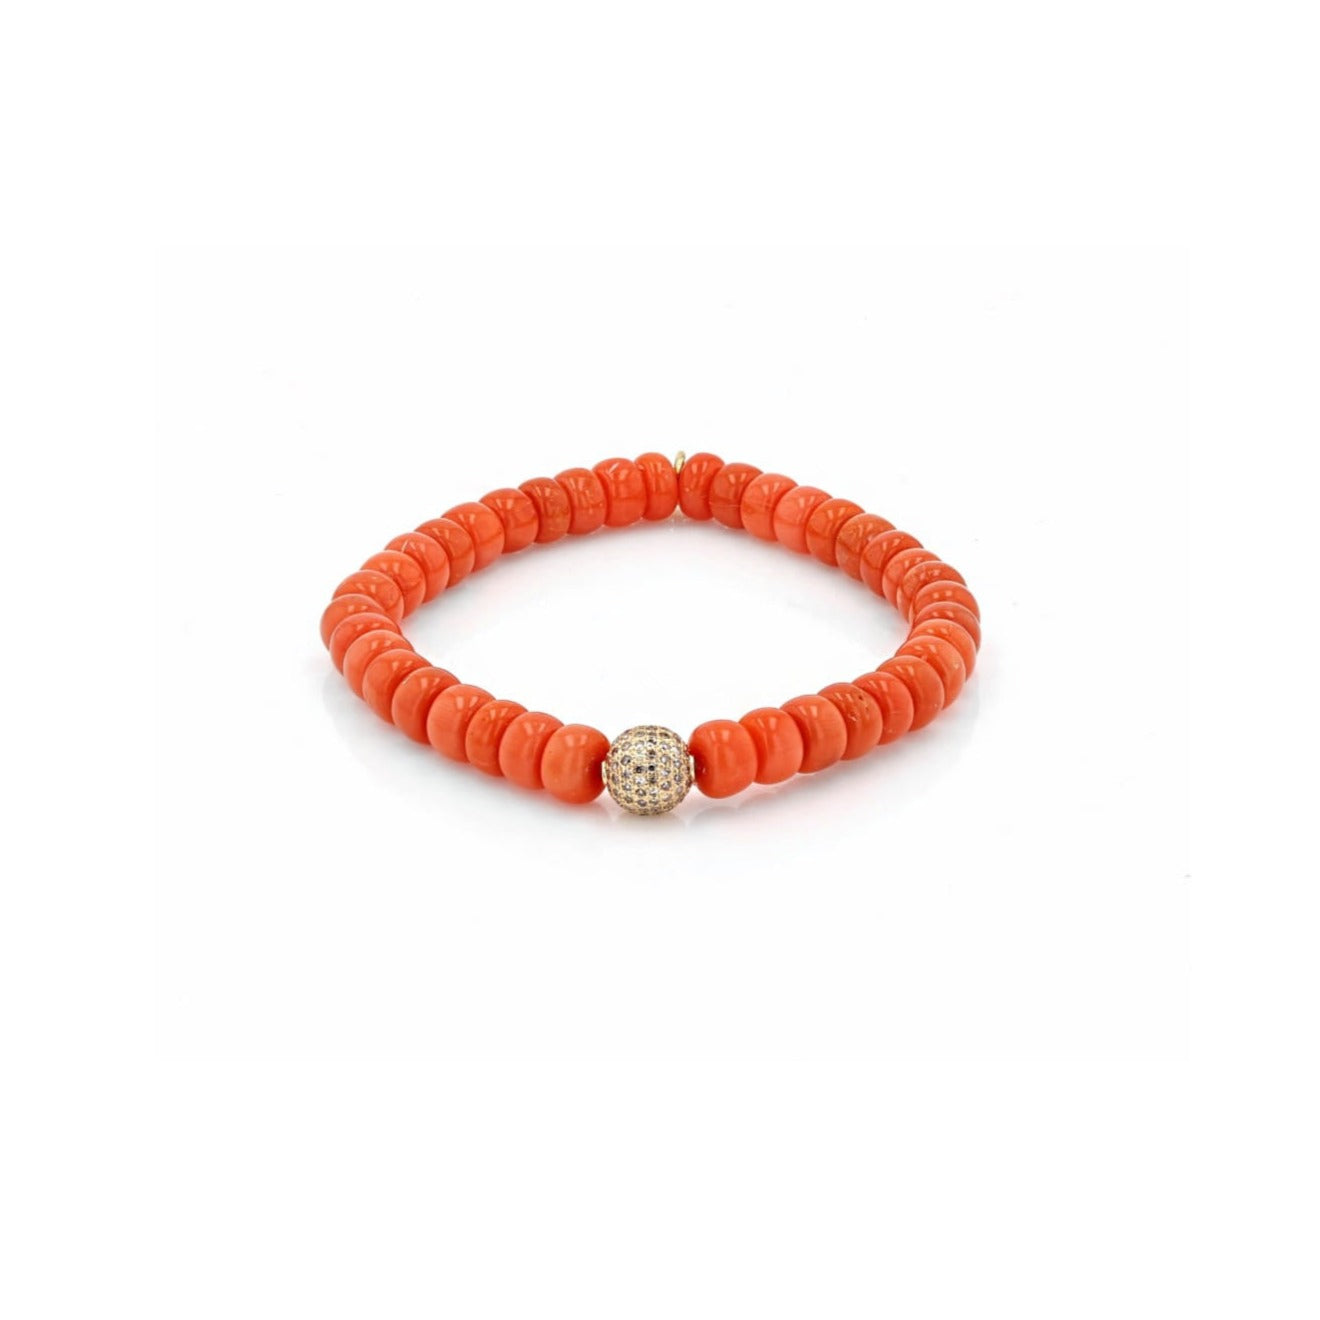 Orange Coral Bead Bracelet with 14K Gold Pave Diamond Ball : BG000750 - TBird